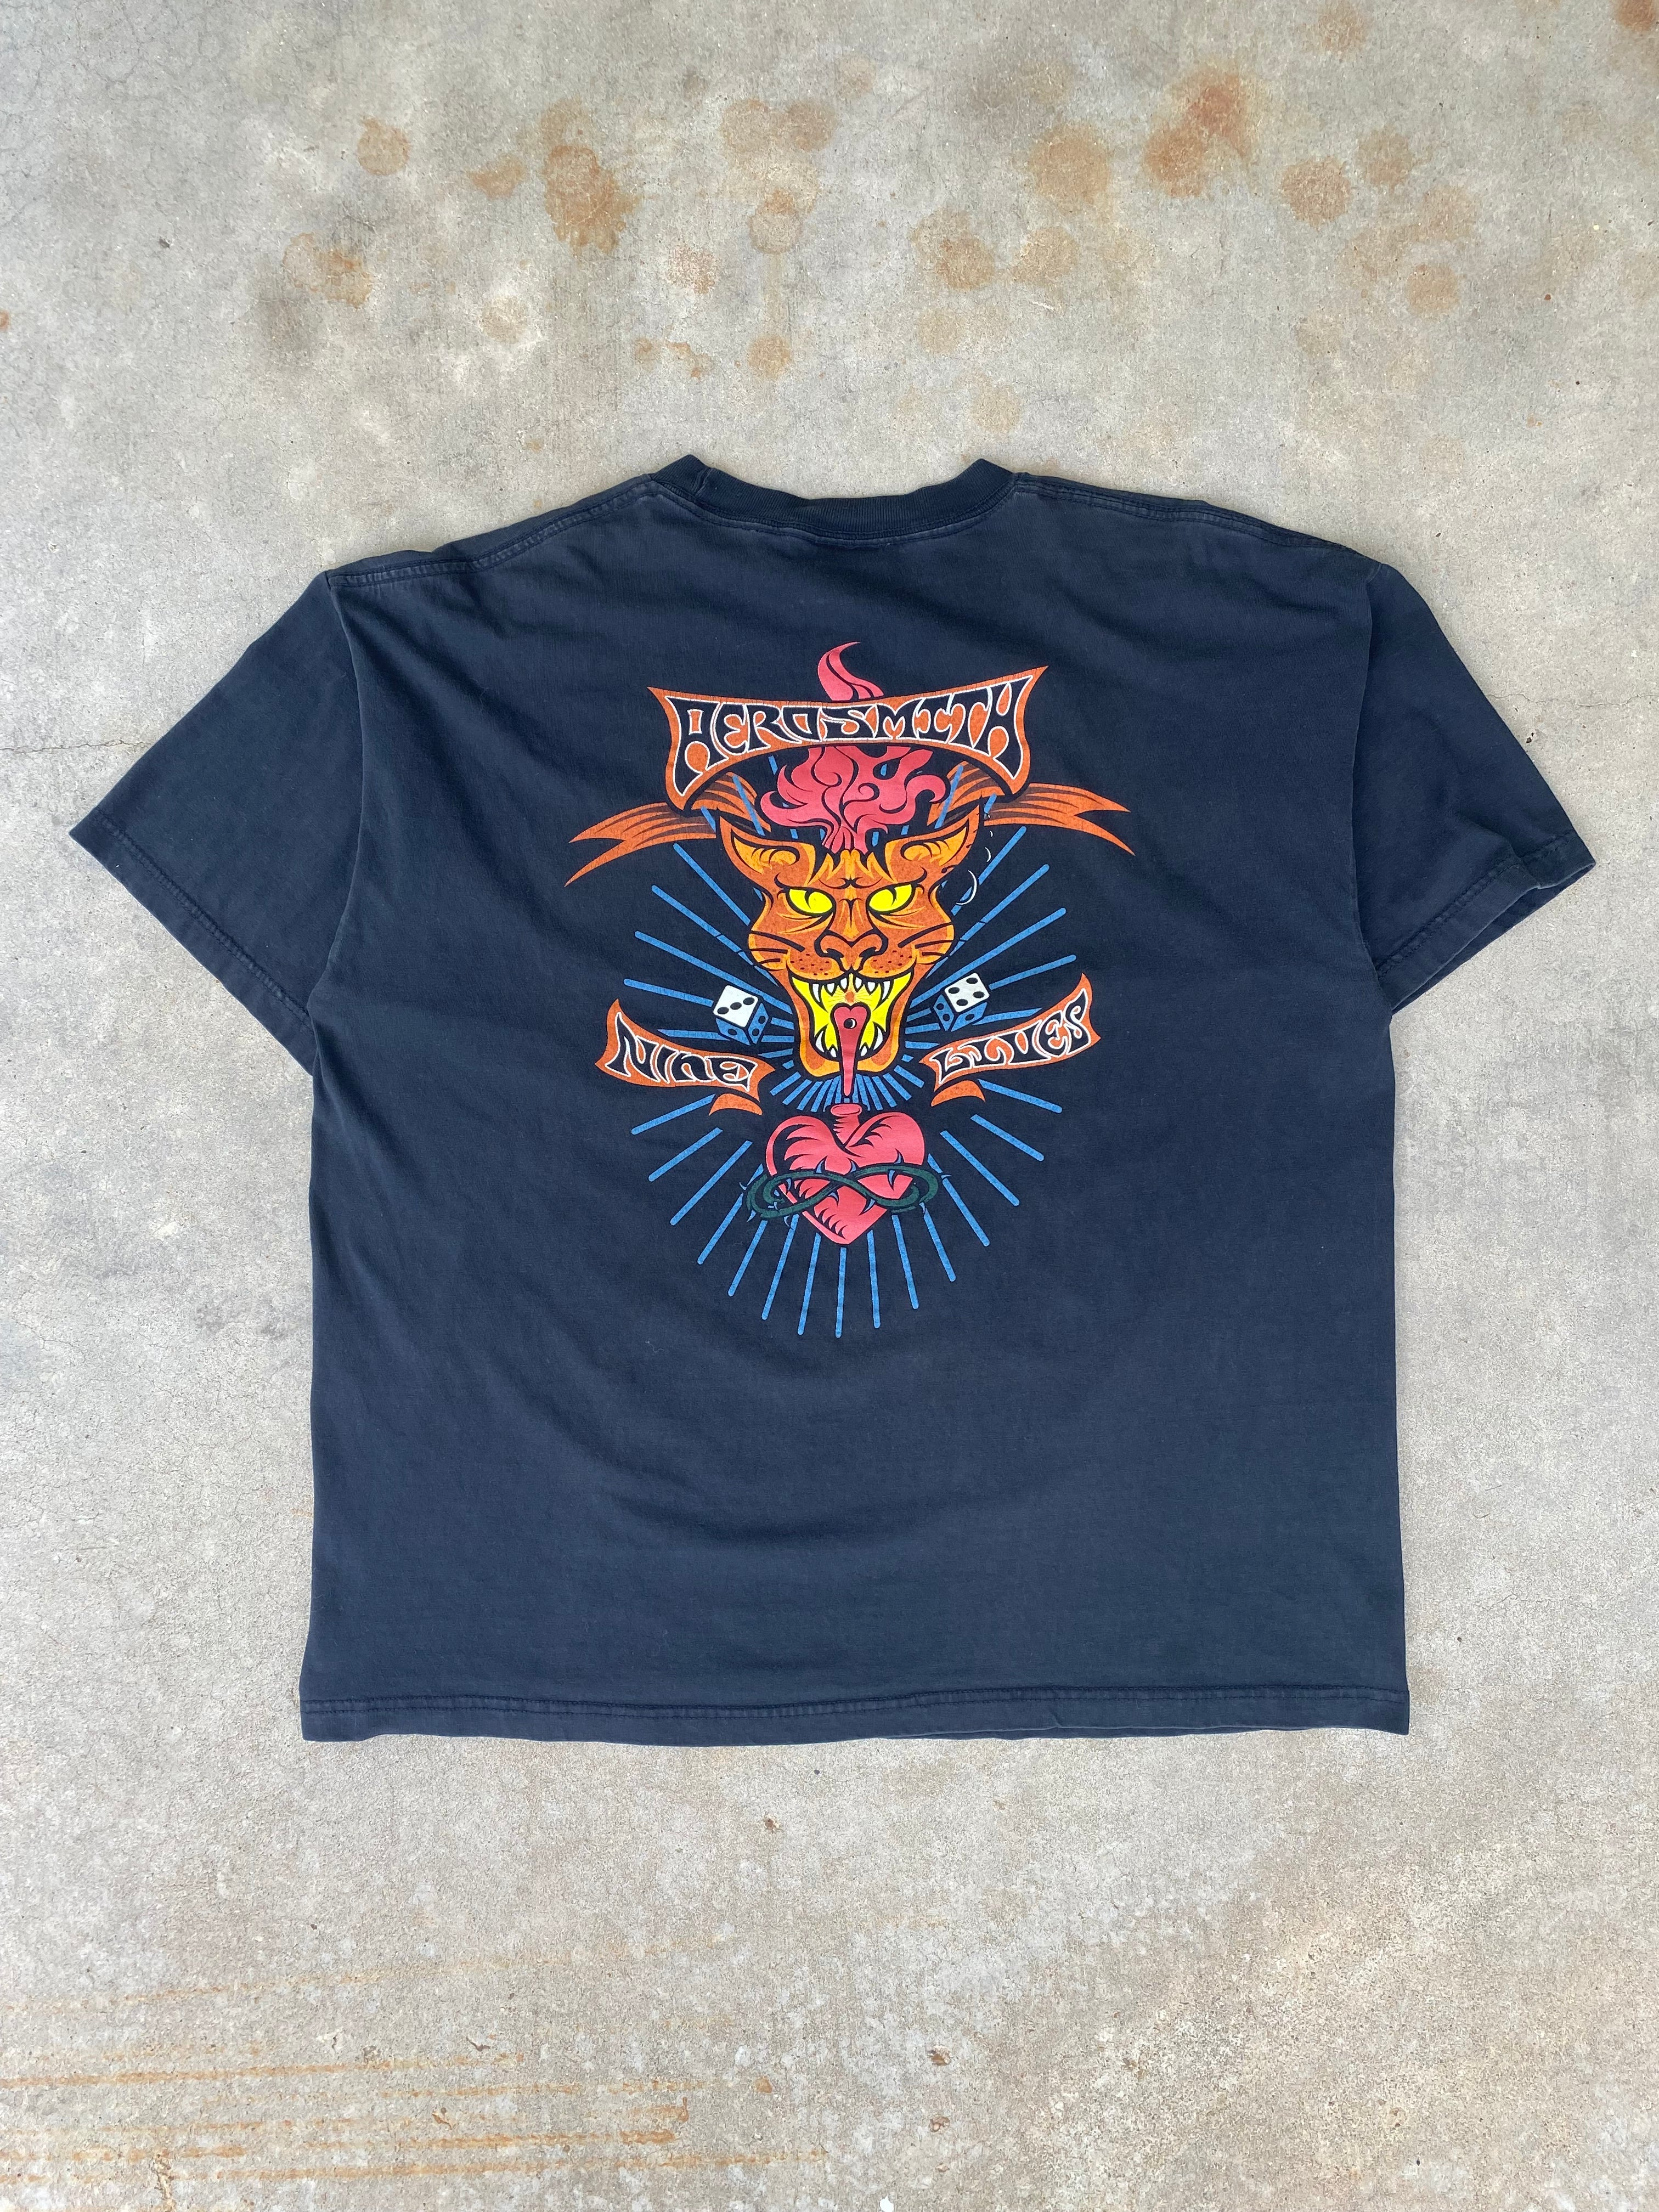 1997 Aerosmith Nine Lives Tour T-Shirt (XL)